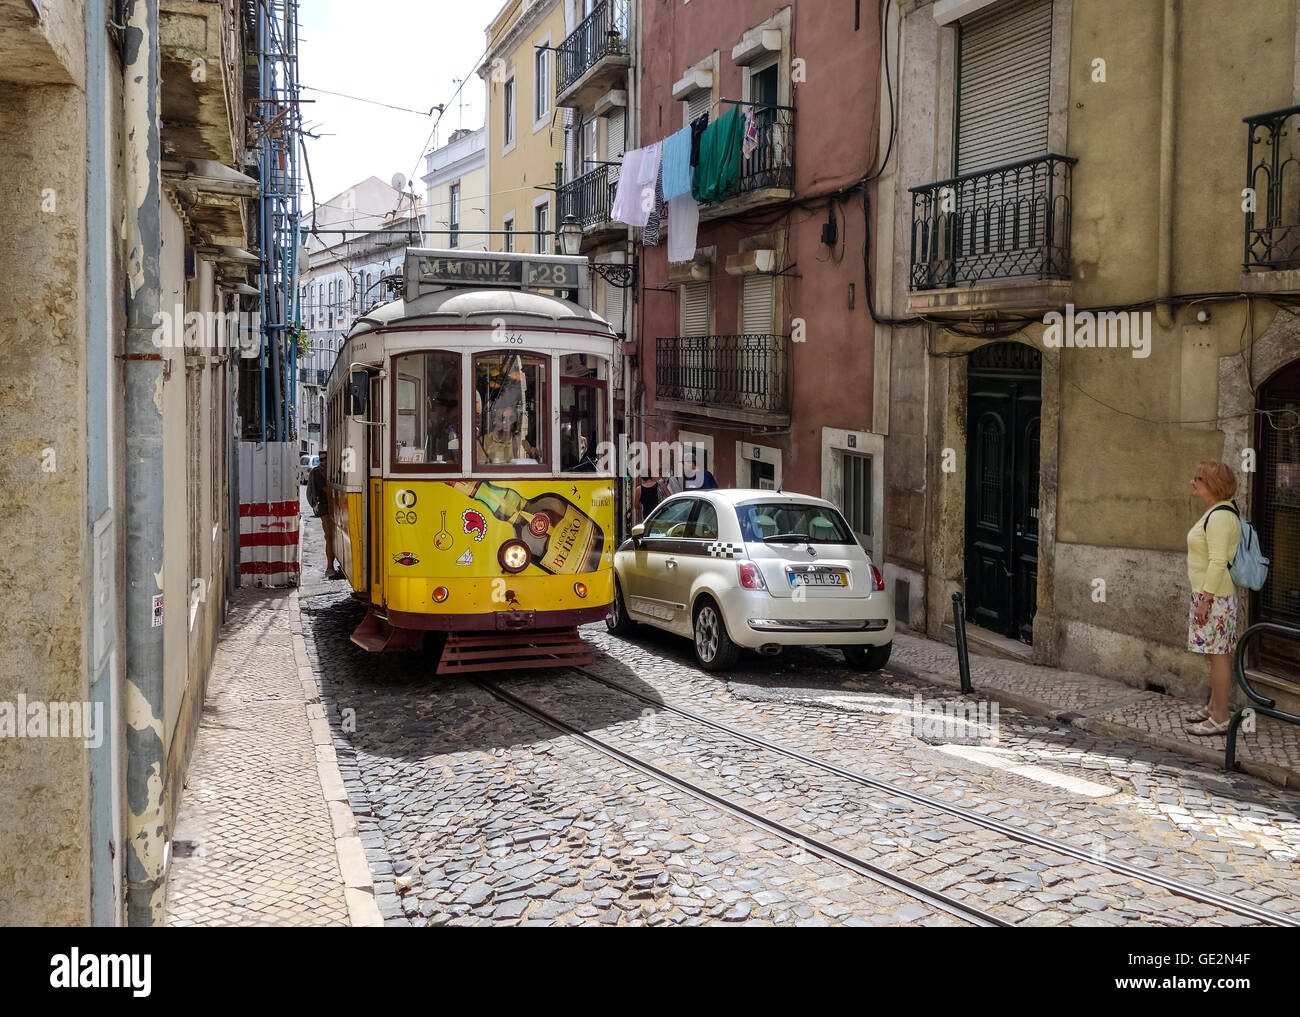 Lisbon, Portugal - September 19, 2014: Tram, the symbol of the city in narrow street of Lisbon. Stock Photo